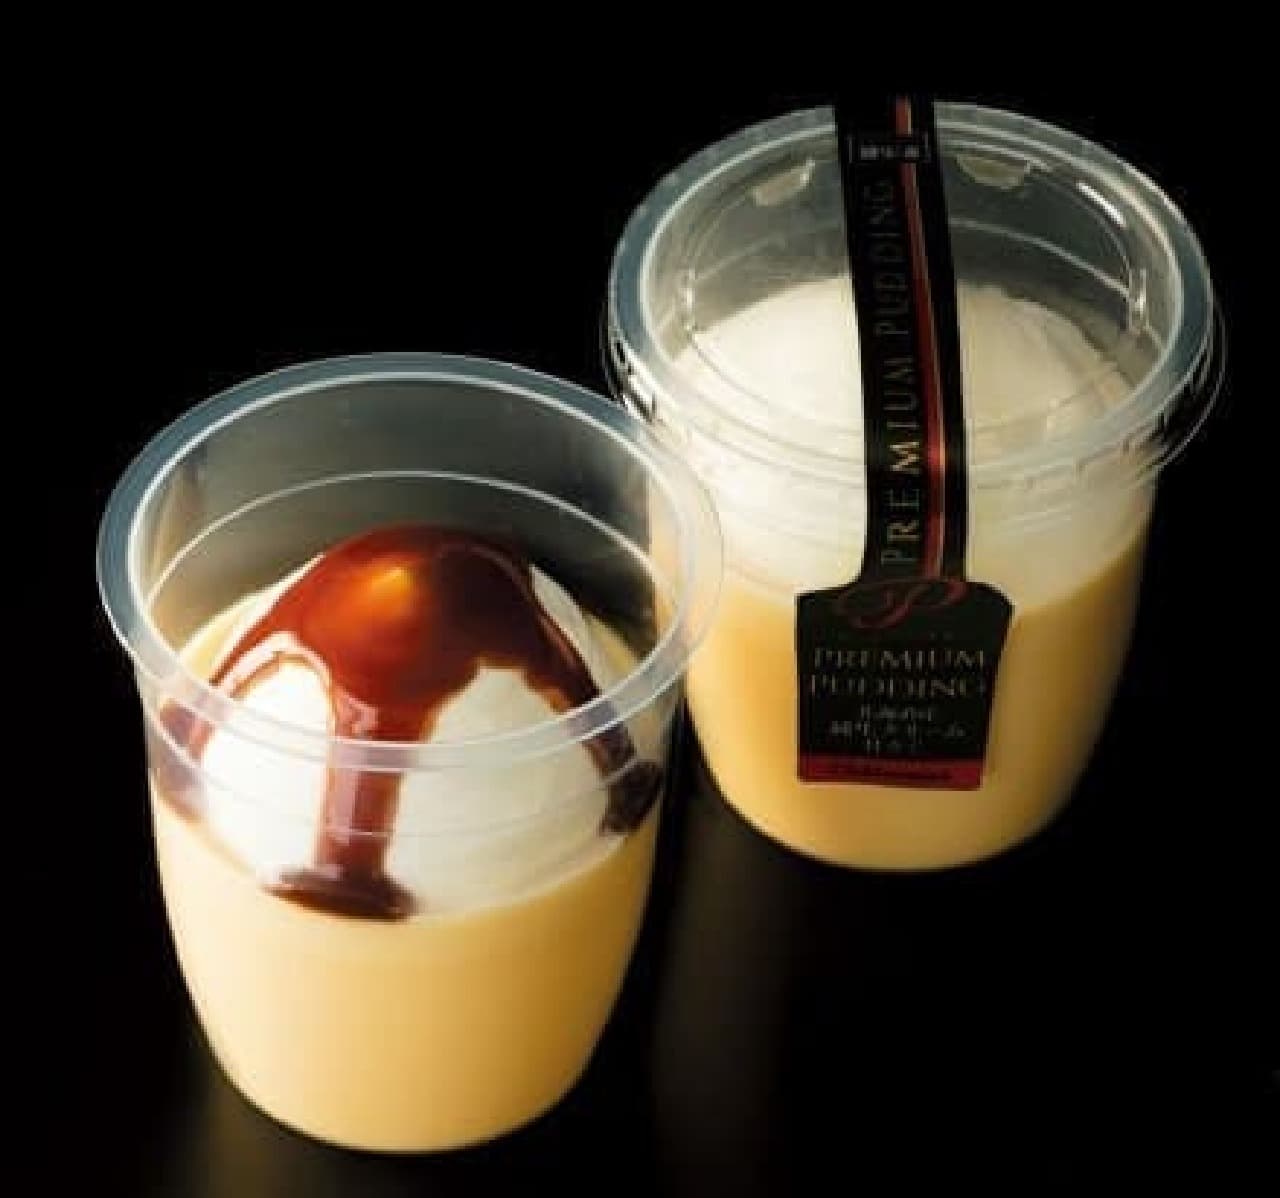 Chateraise "Premium pudding made with pure fresh cream from Hokkaido"